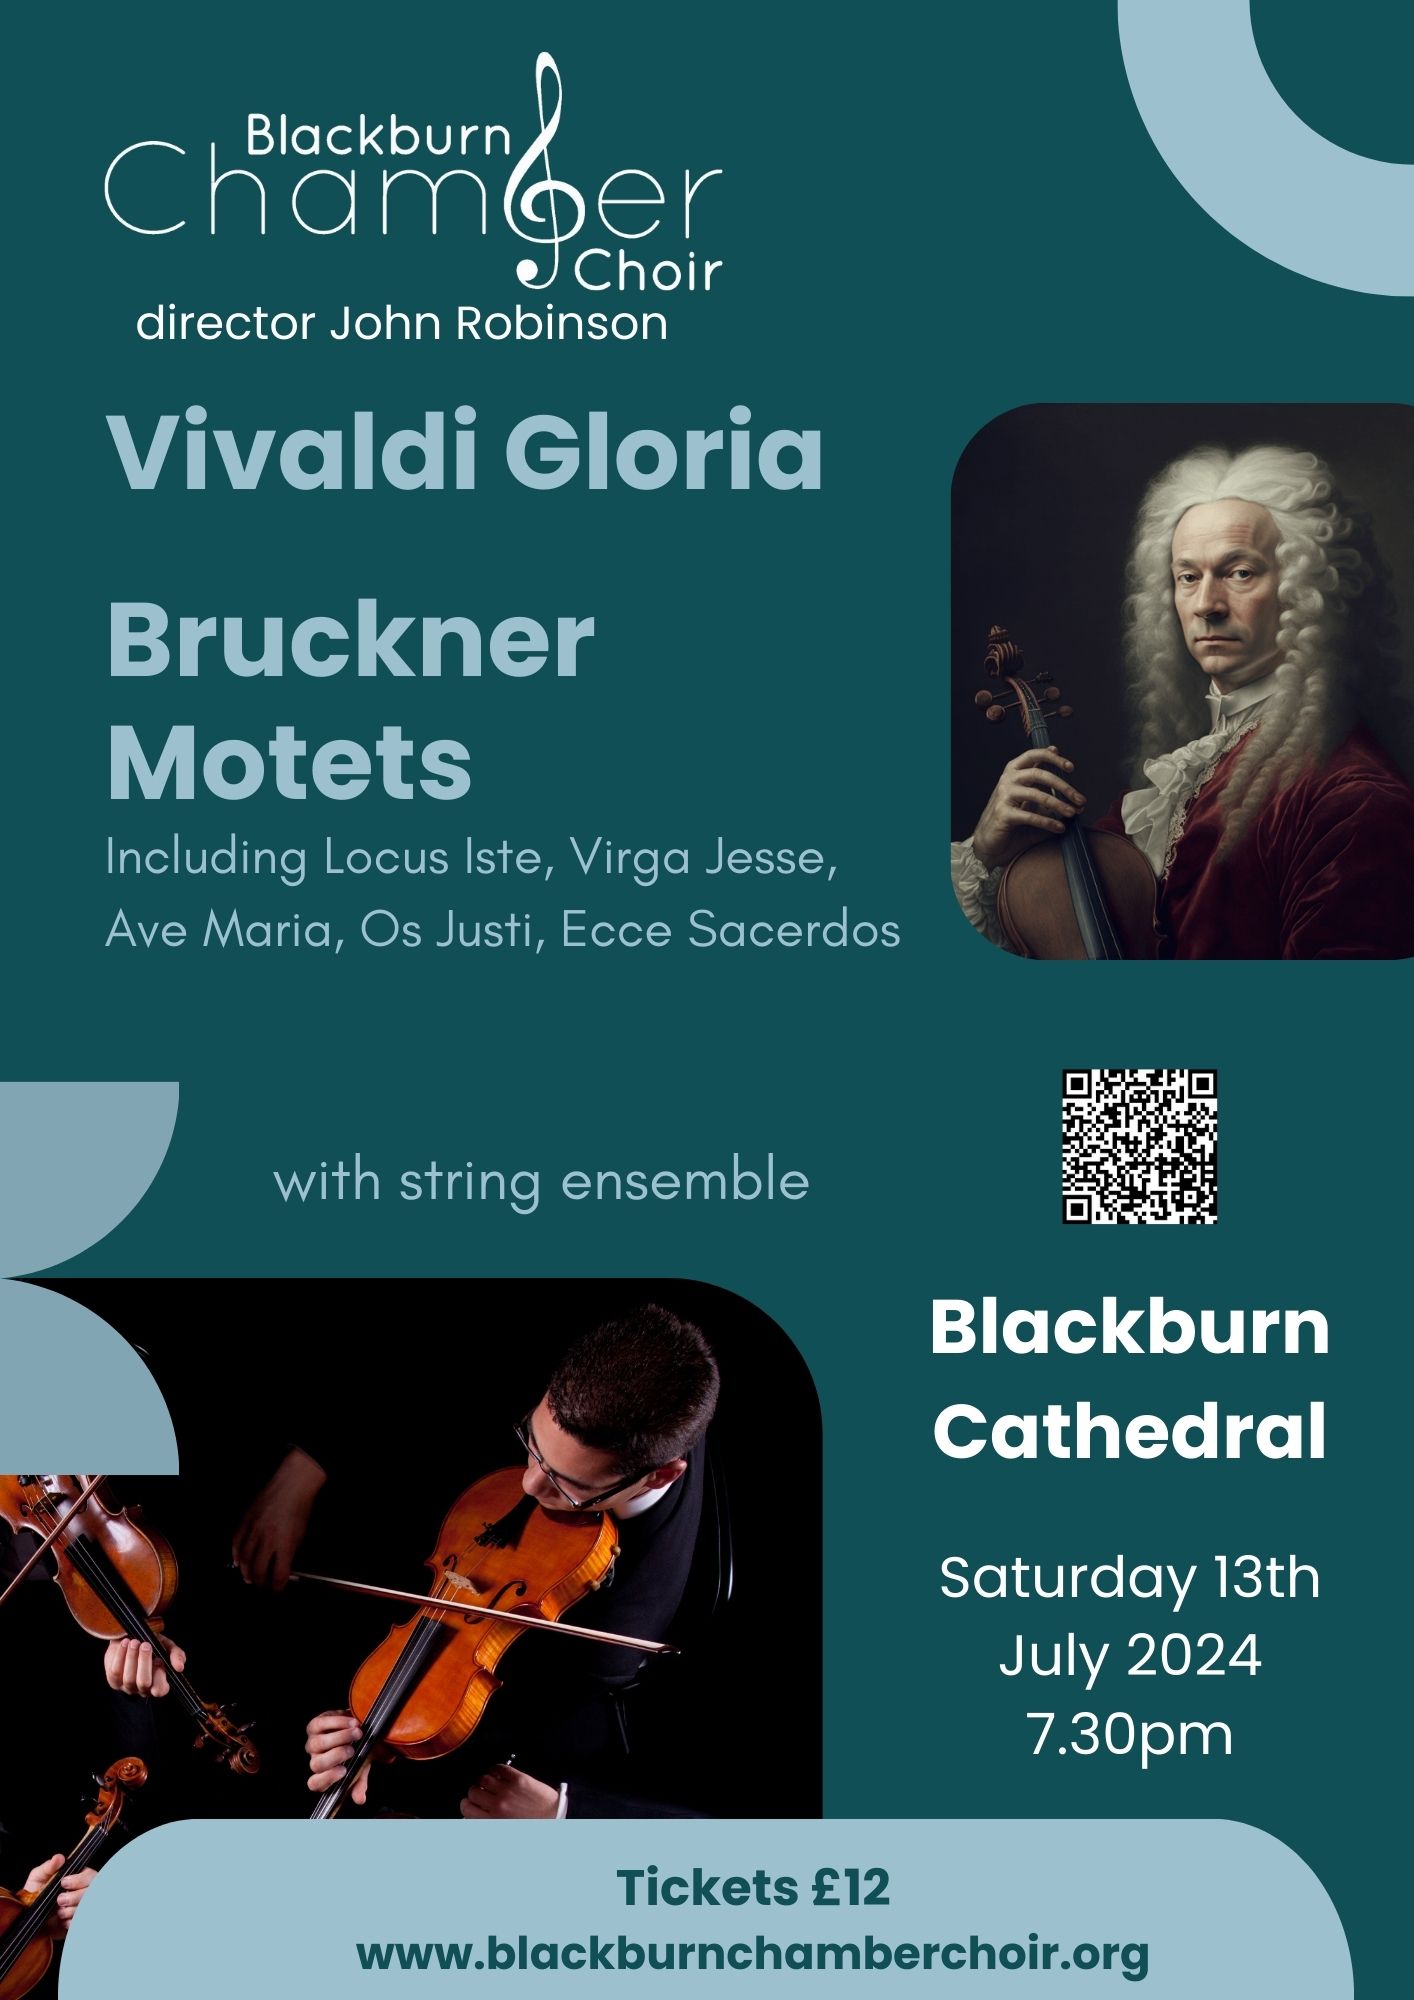 Vivaldi Gloria and Brucker Motets